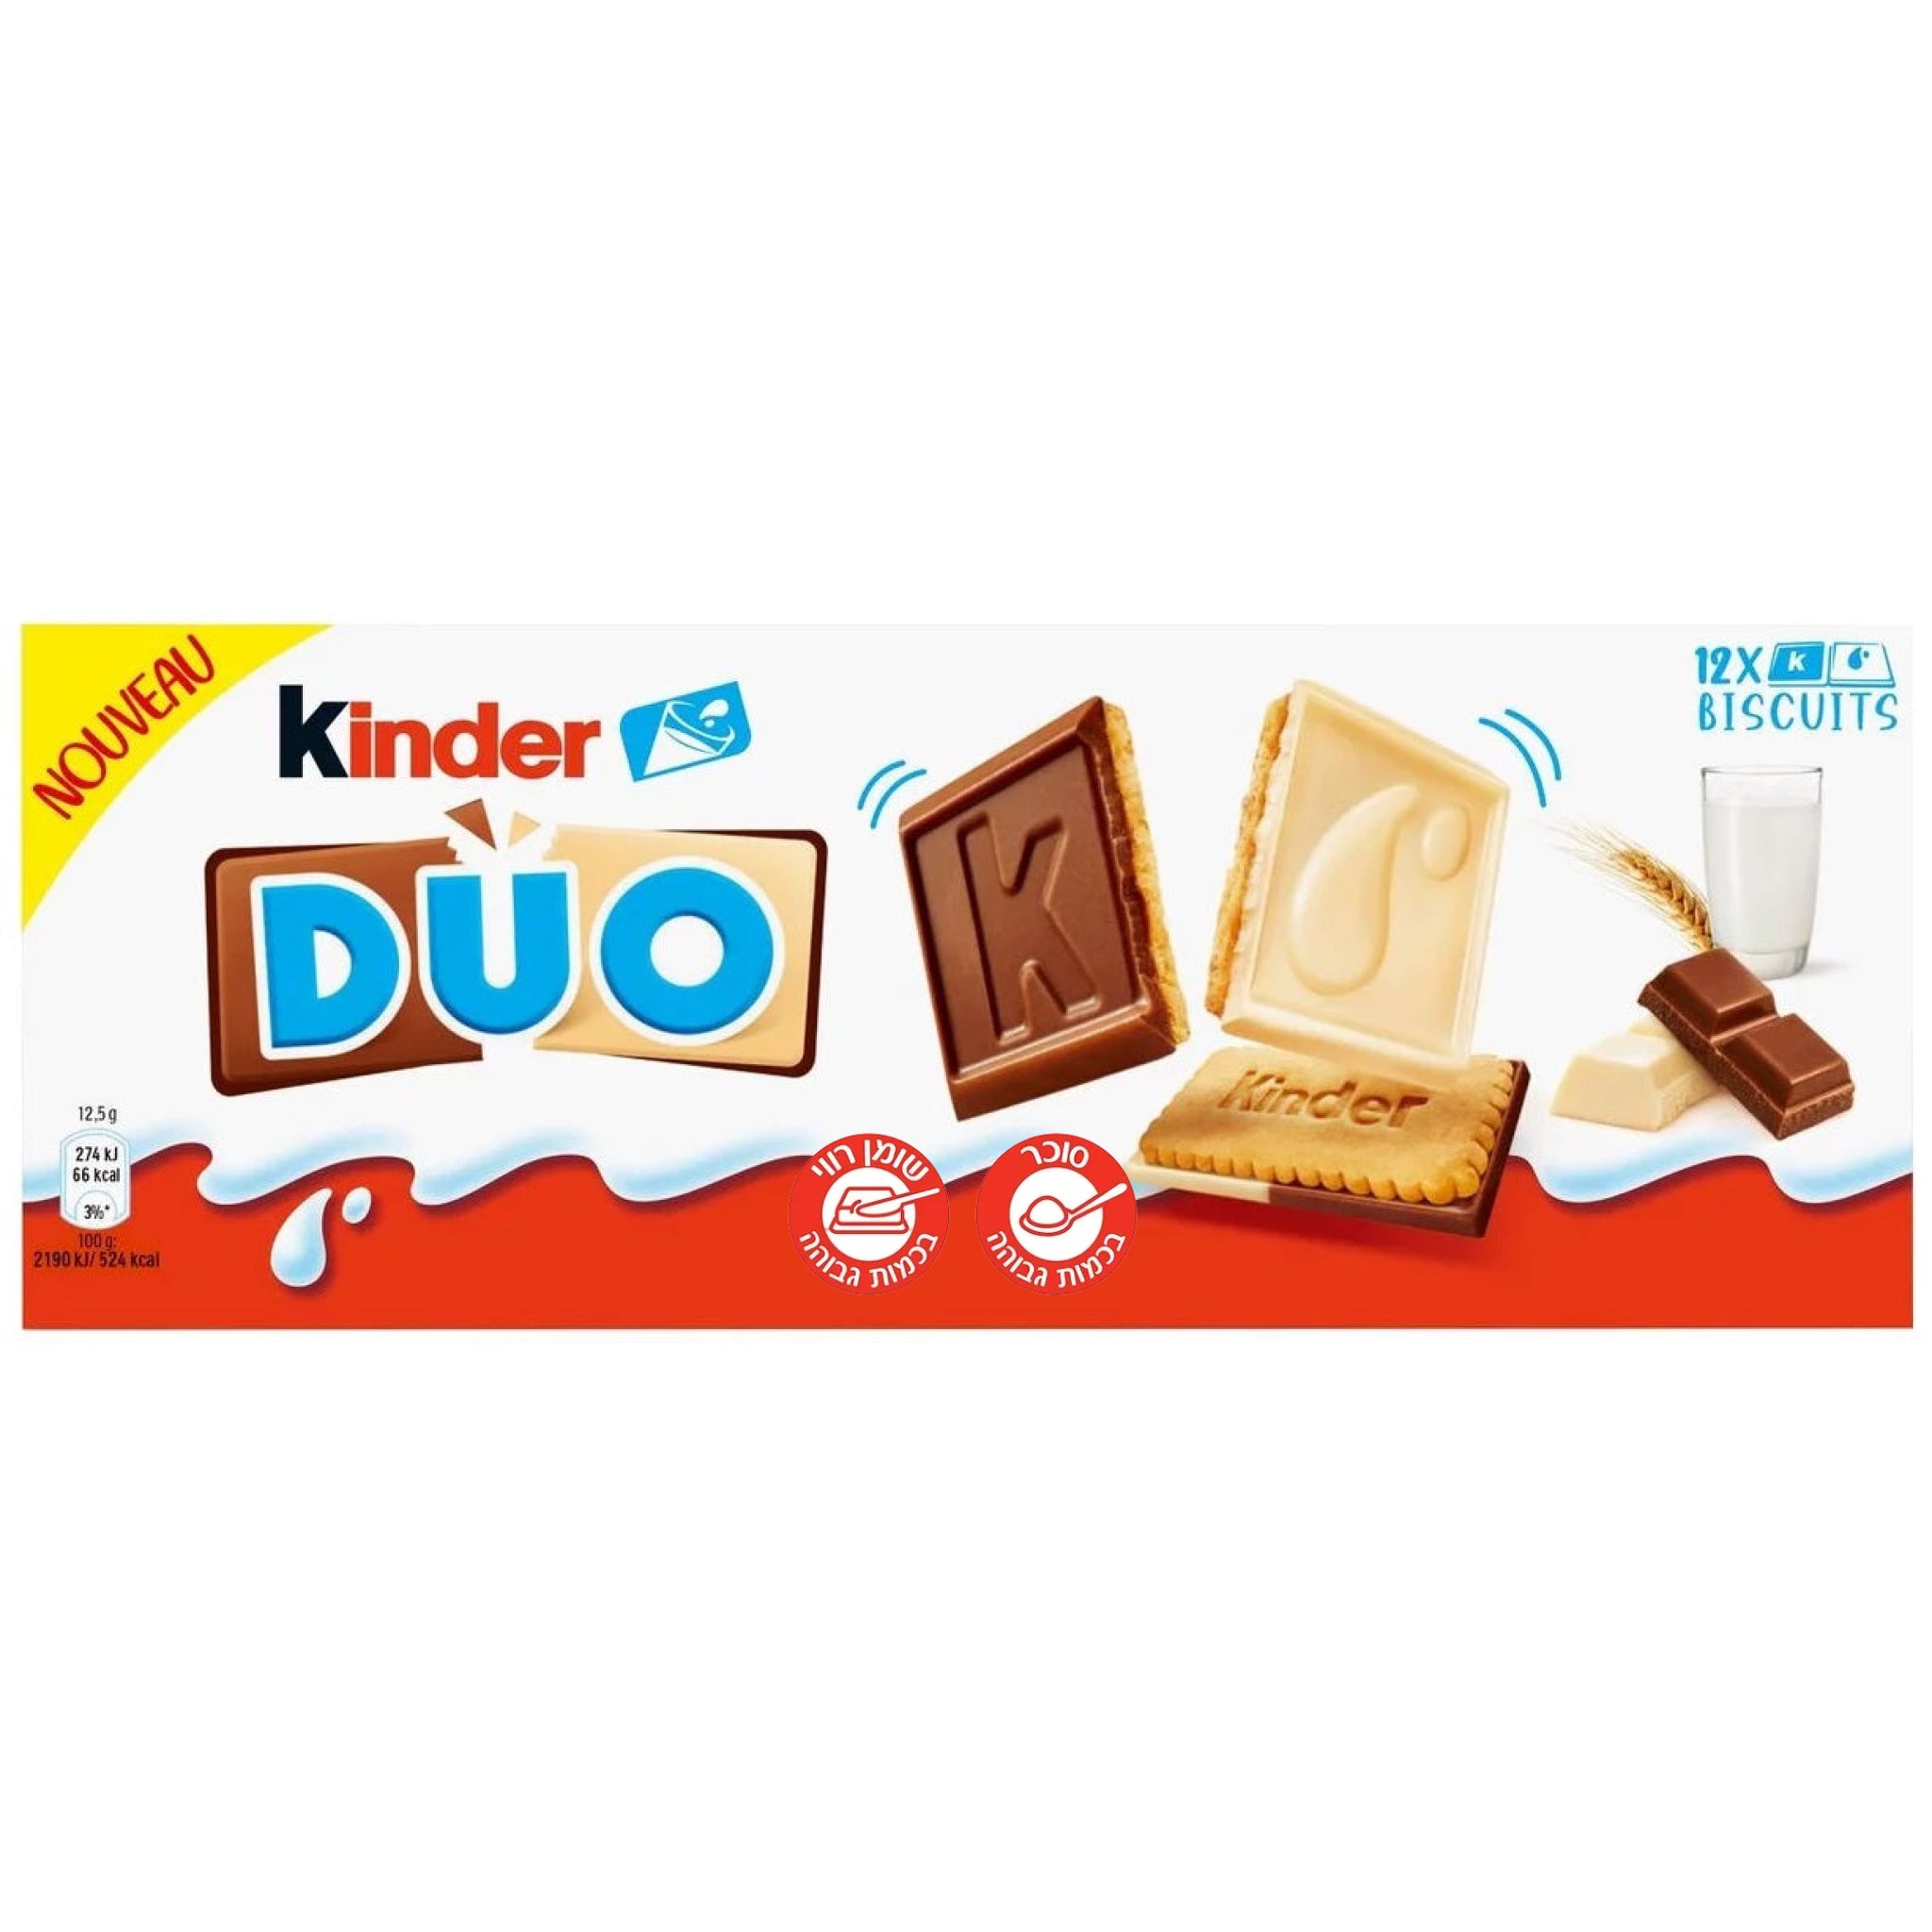 Kinder Duo!!! קינדר 2 צבעים. מלאי מוגבל כשר שוקולדים